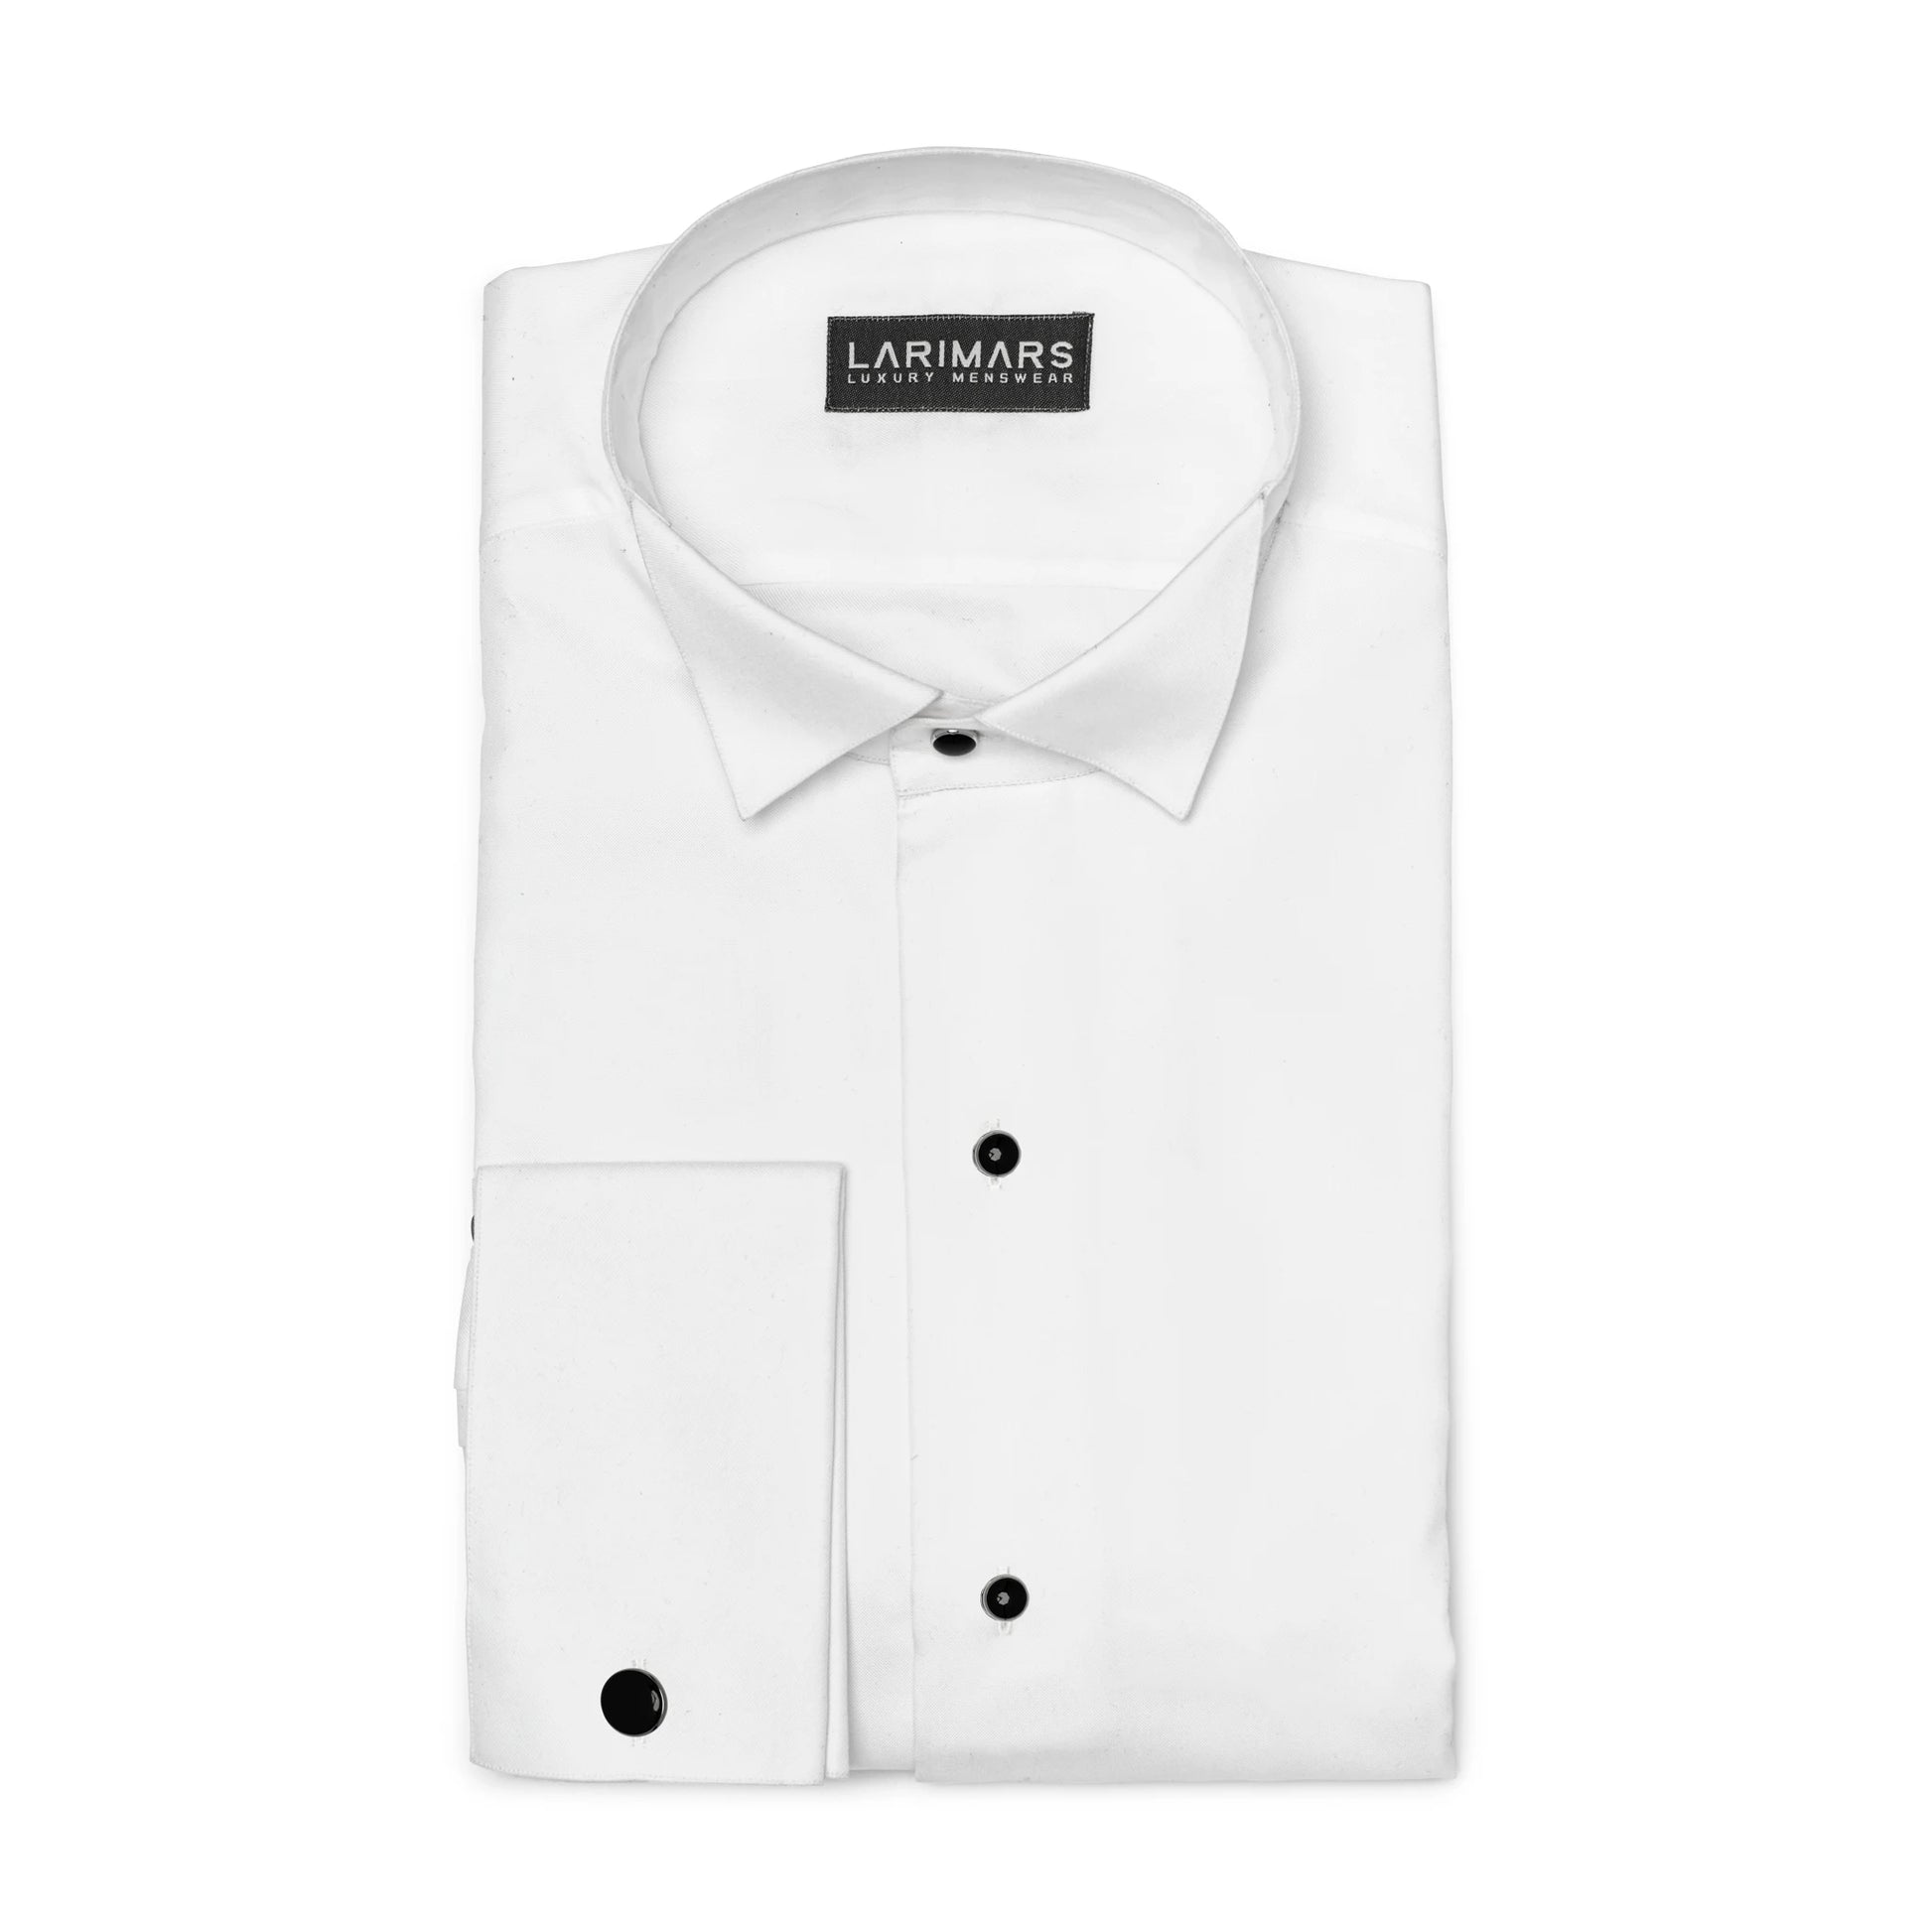 Wingtip Tuxedo Wedding Shirt - Larimars Clothing Men's Formal and casual wear shirts